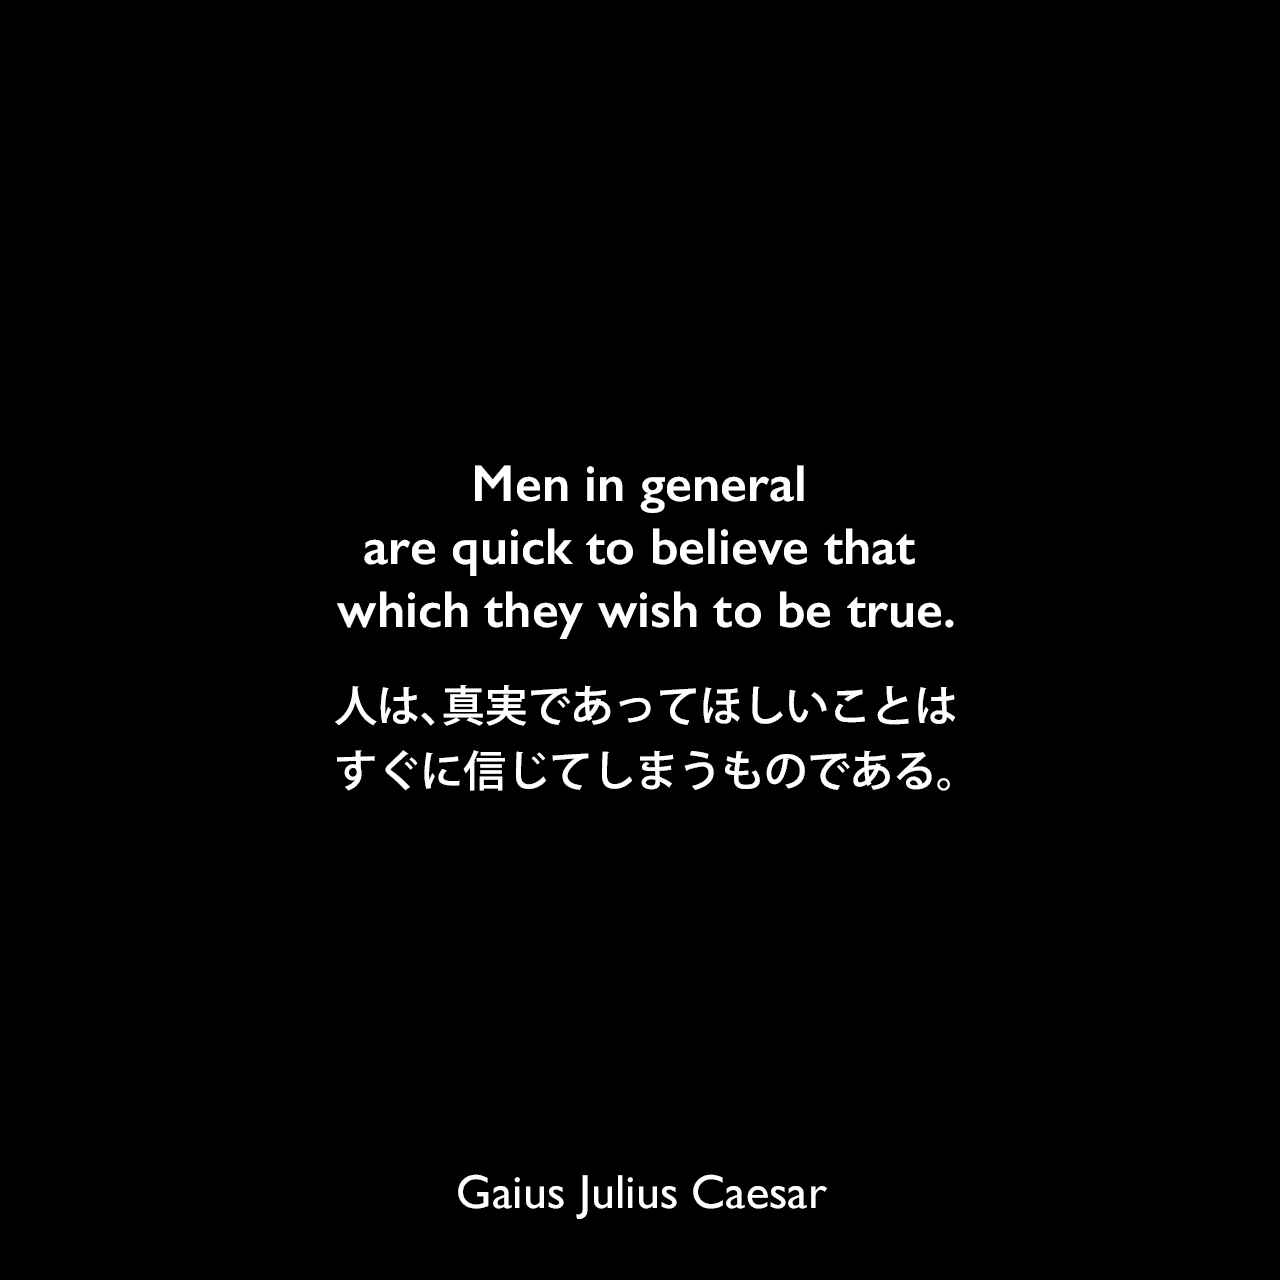 Men in general are quick to believe that which they wish to be true.人は、真実であってほしいことはすぐに信じてしまうものである。Gaius Julius Caesar